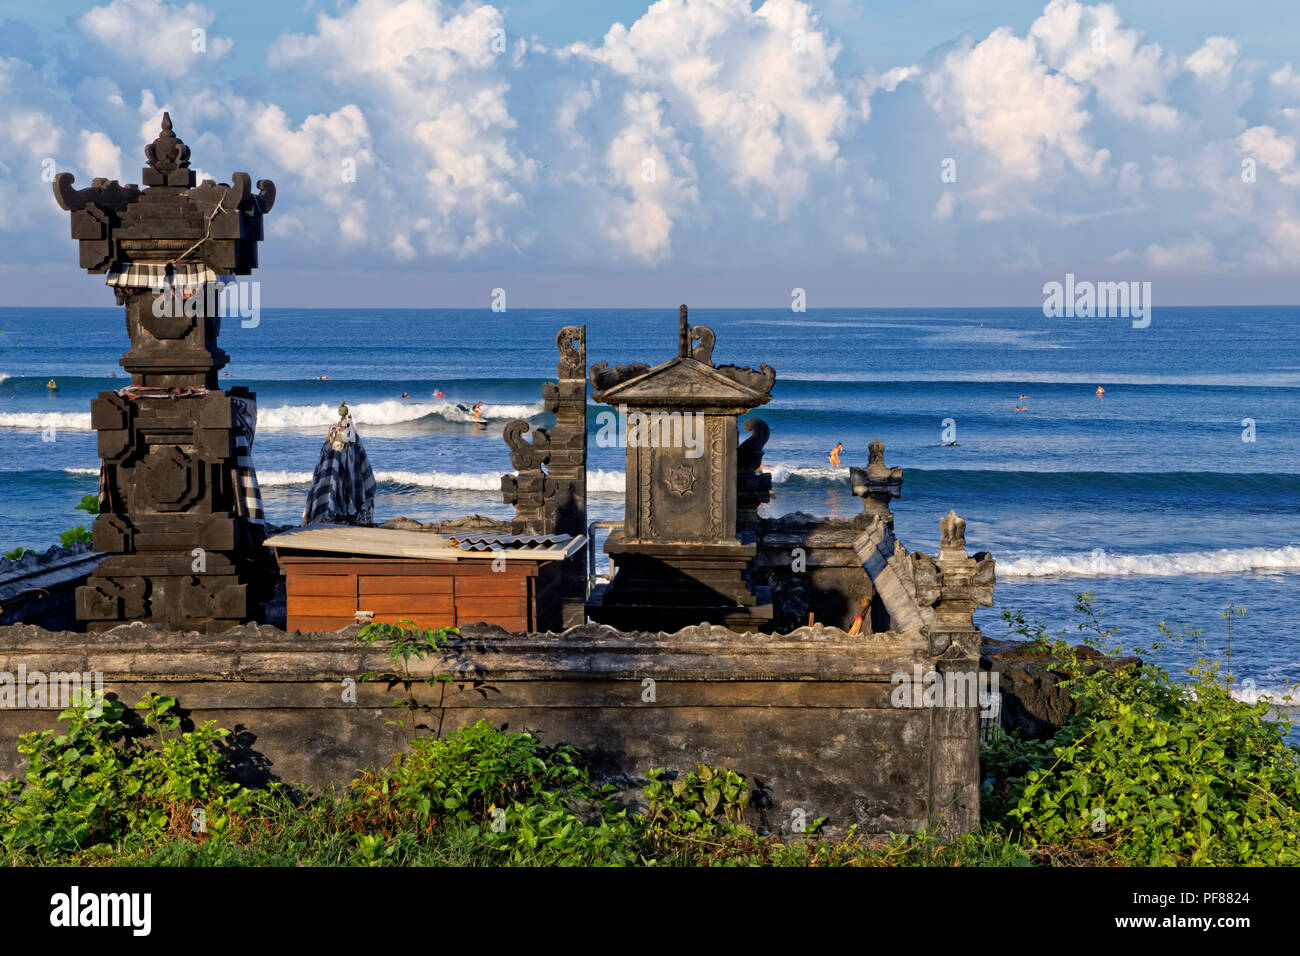 Balinese Temple at Batu Bolong Surf Beach, Bali Stock Photo